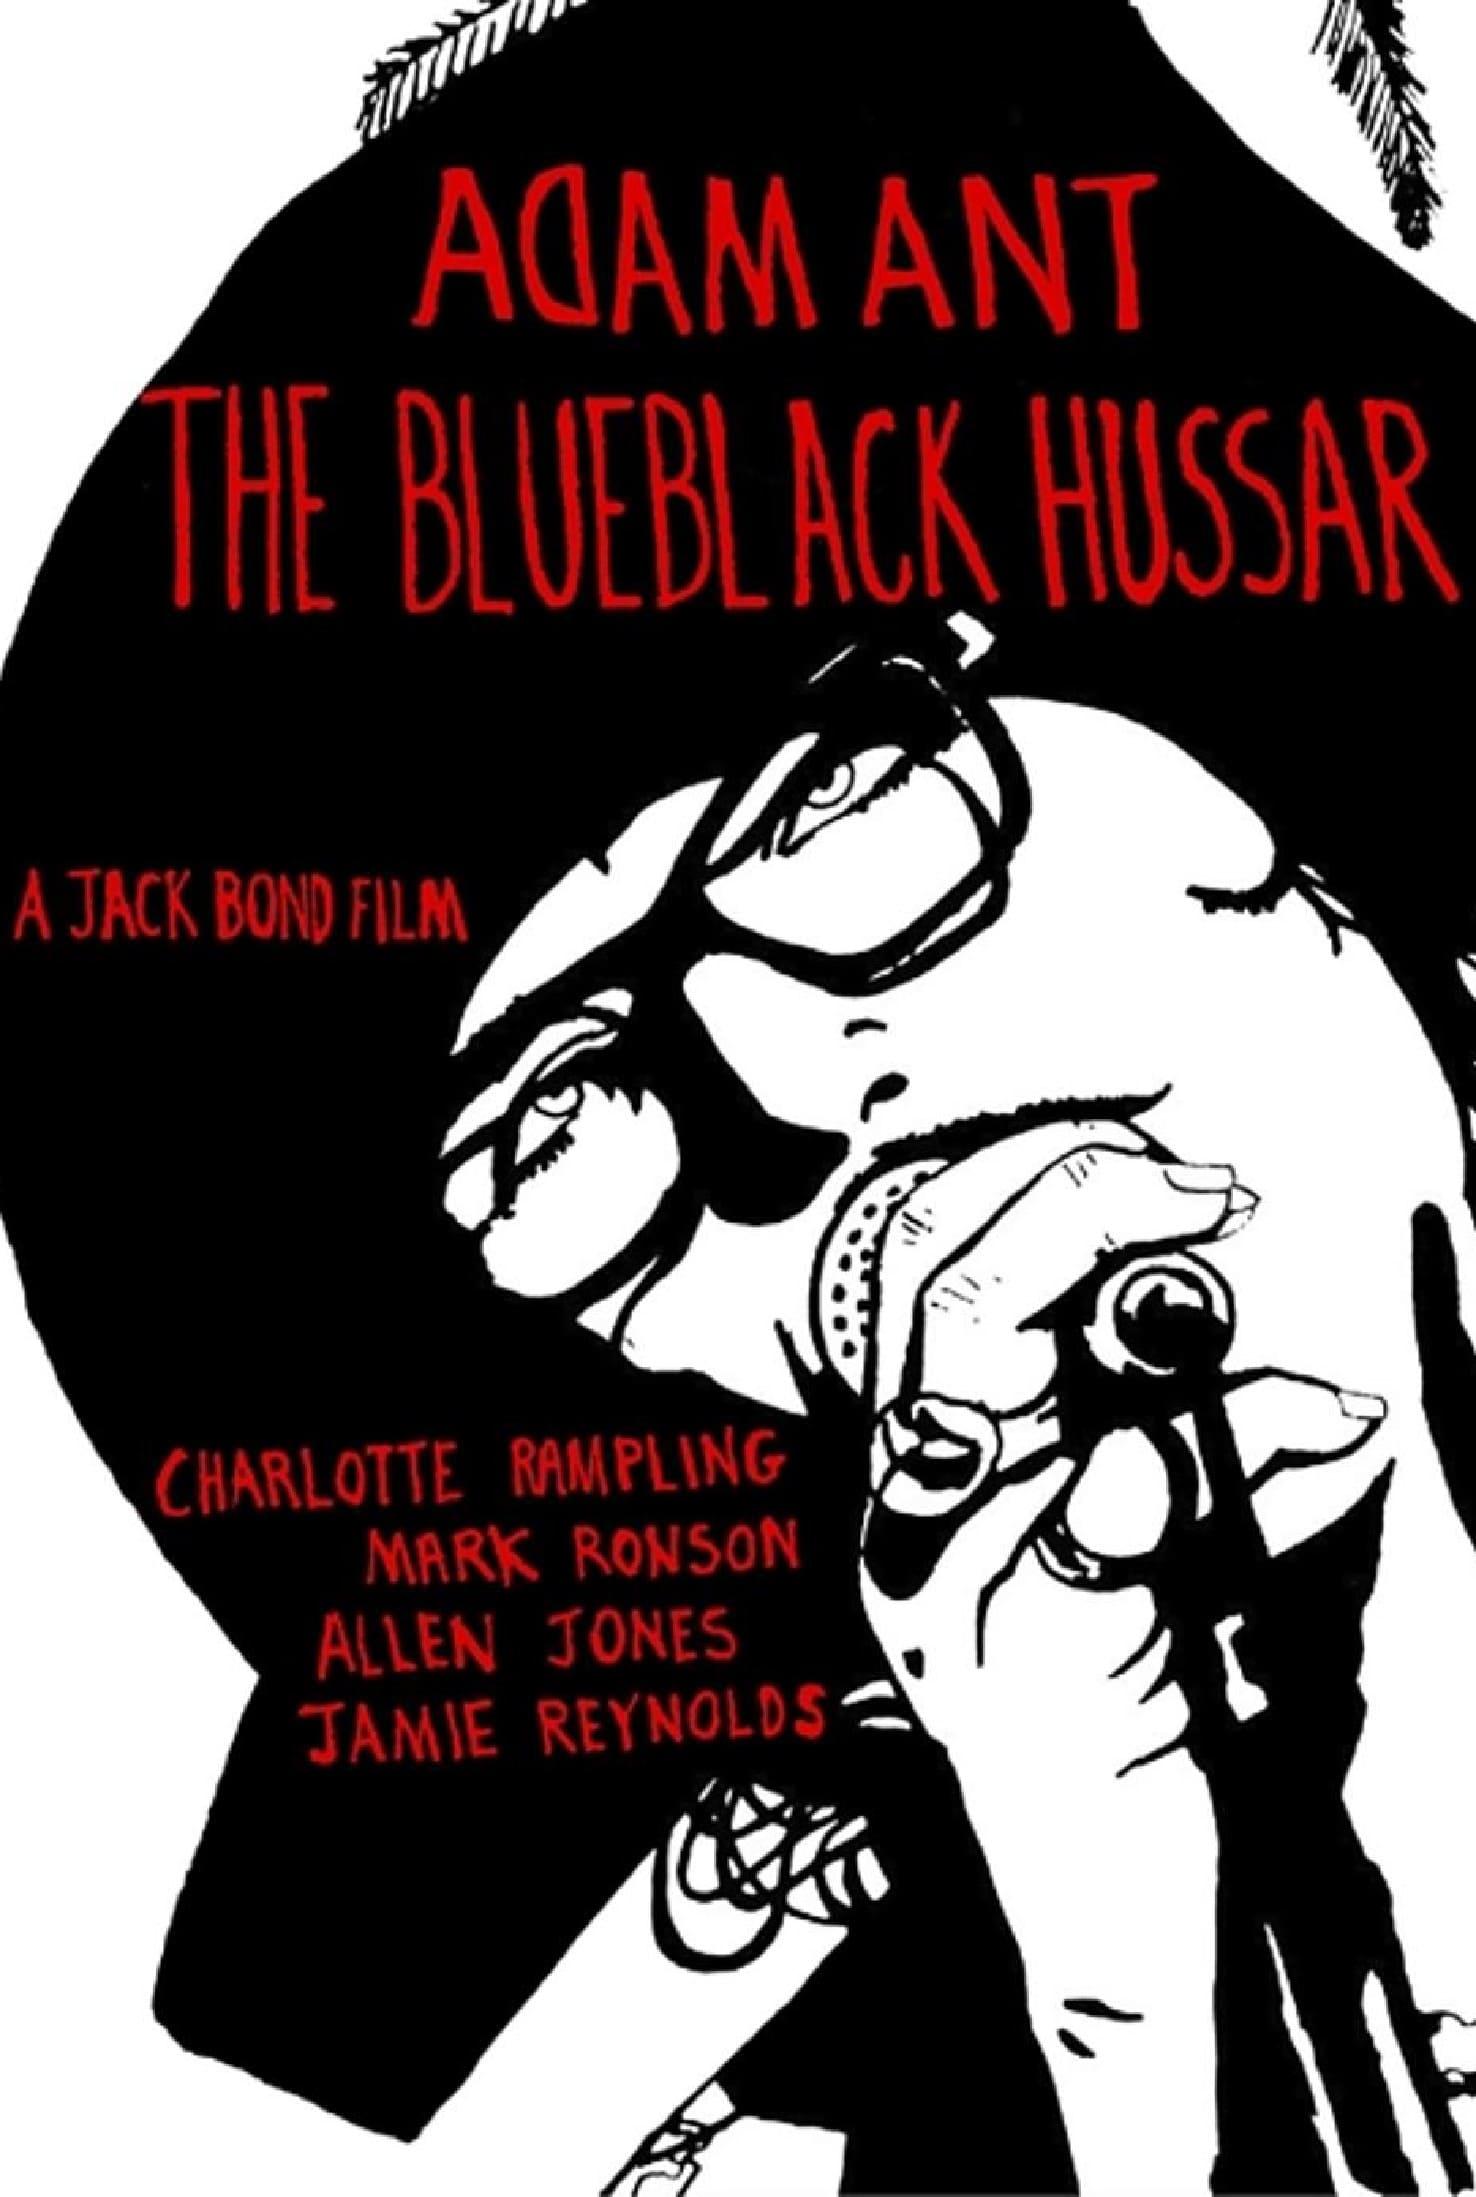 Adam Ant: The Blueblack Hussar poster